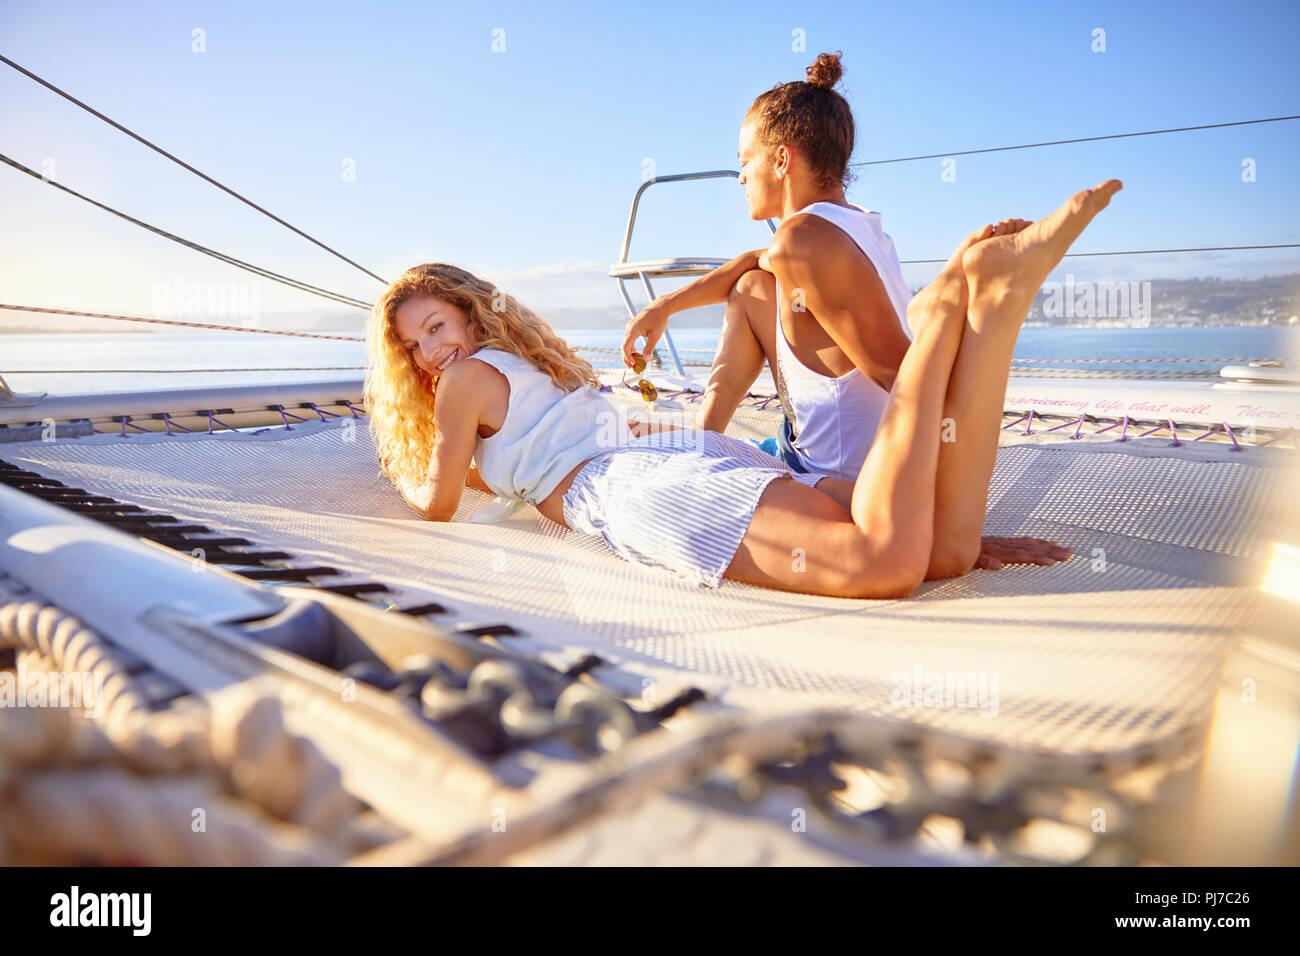 Portrait smiling woman relaxing on sunny catamaran Stock Photo